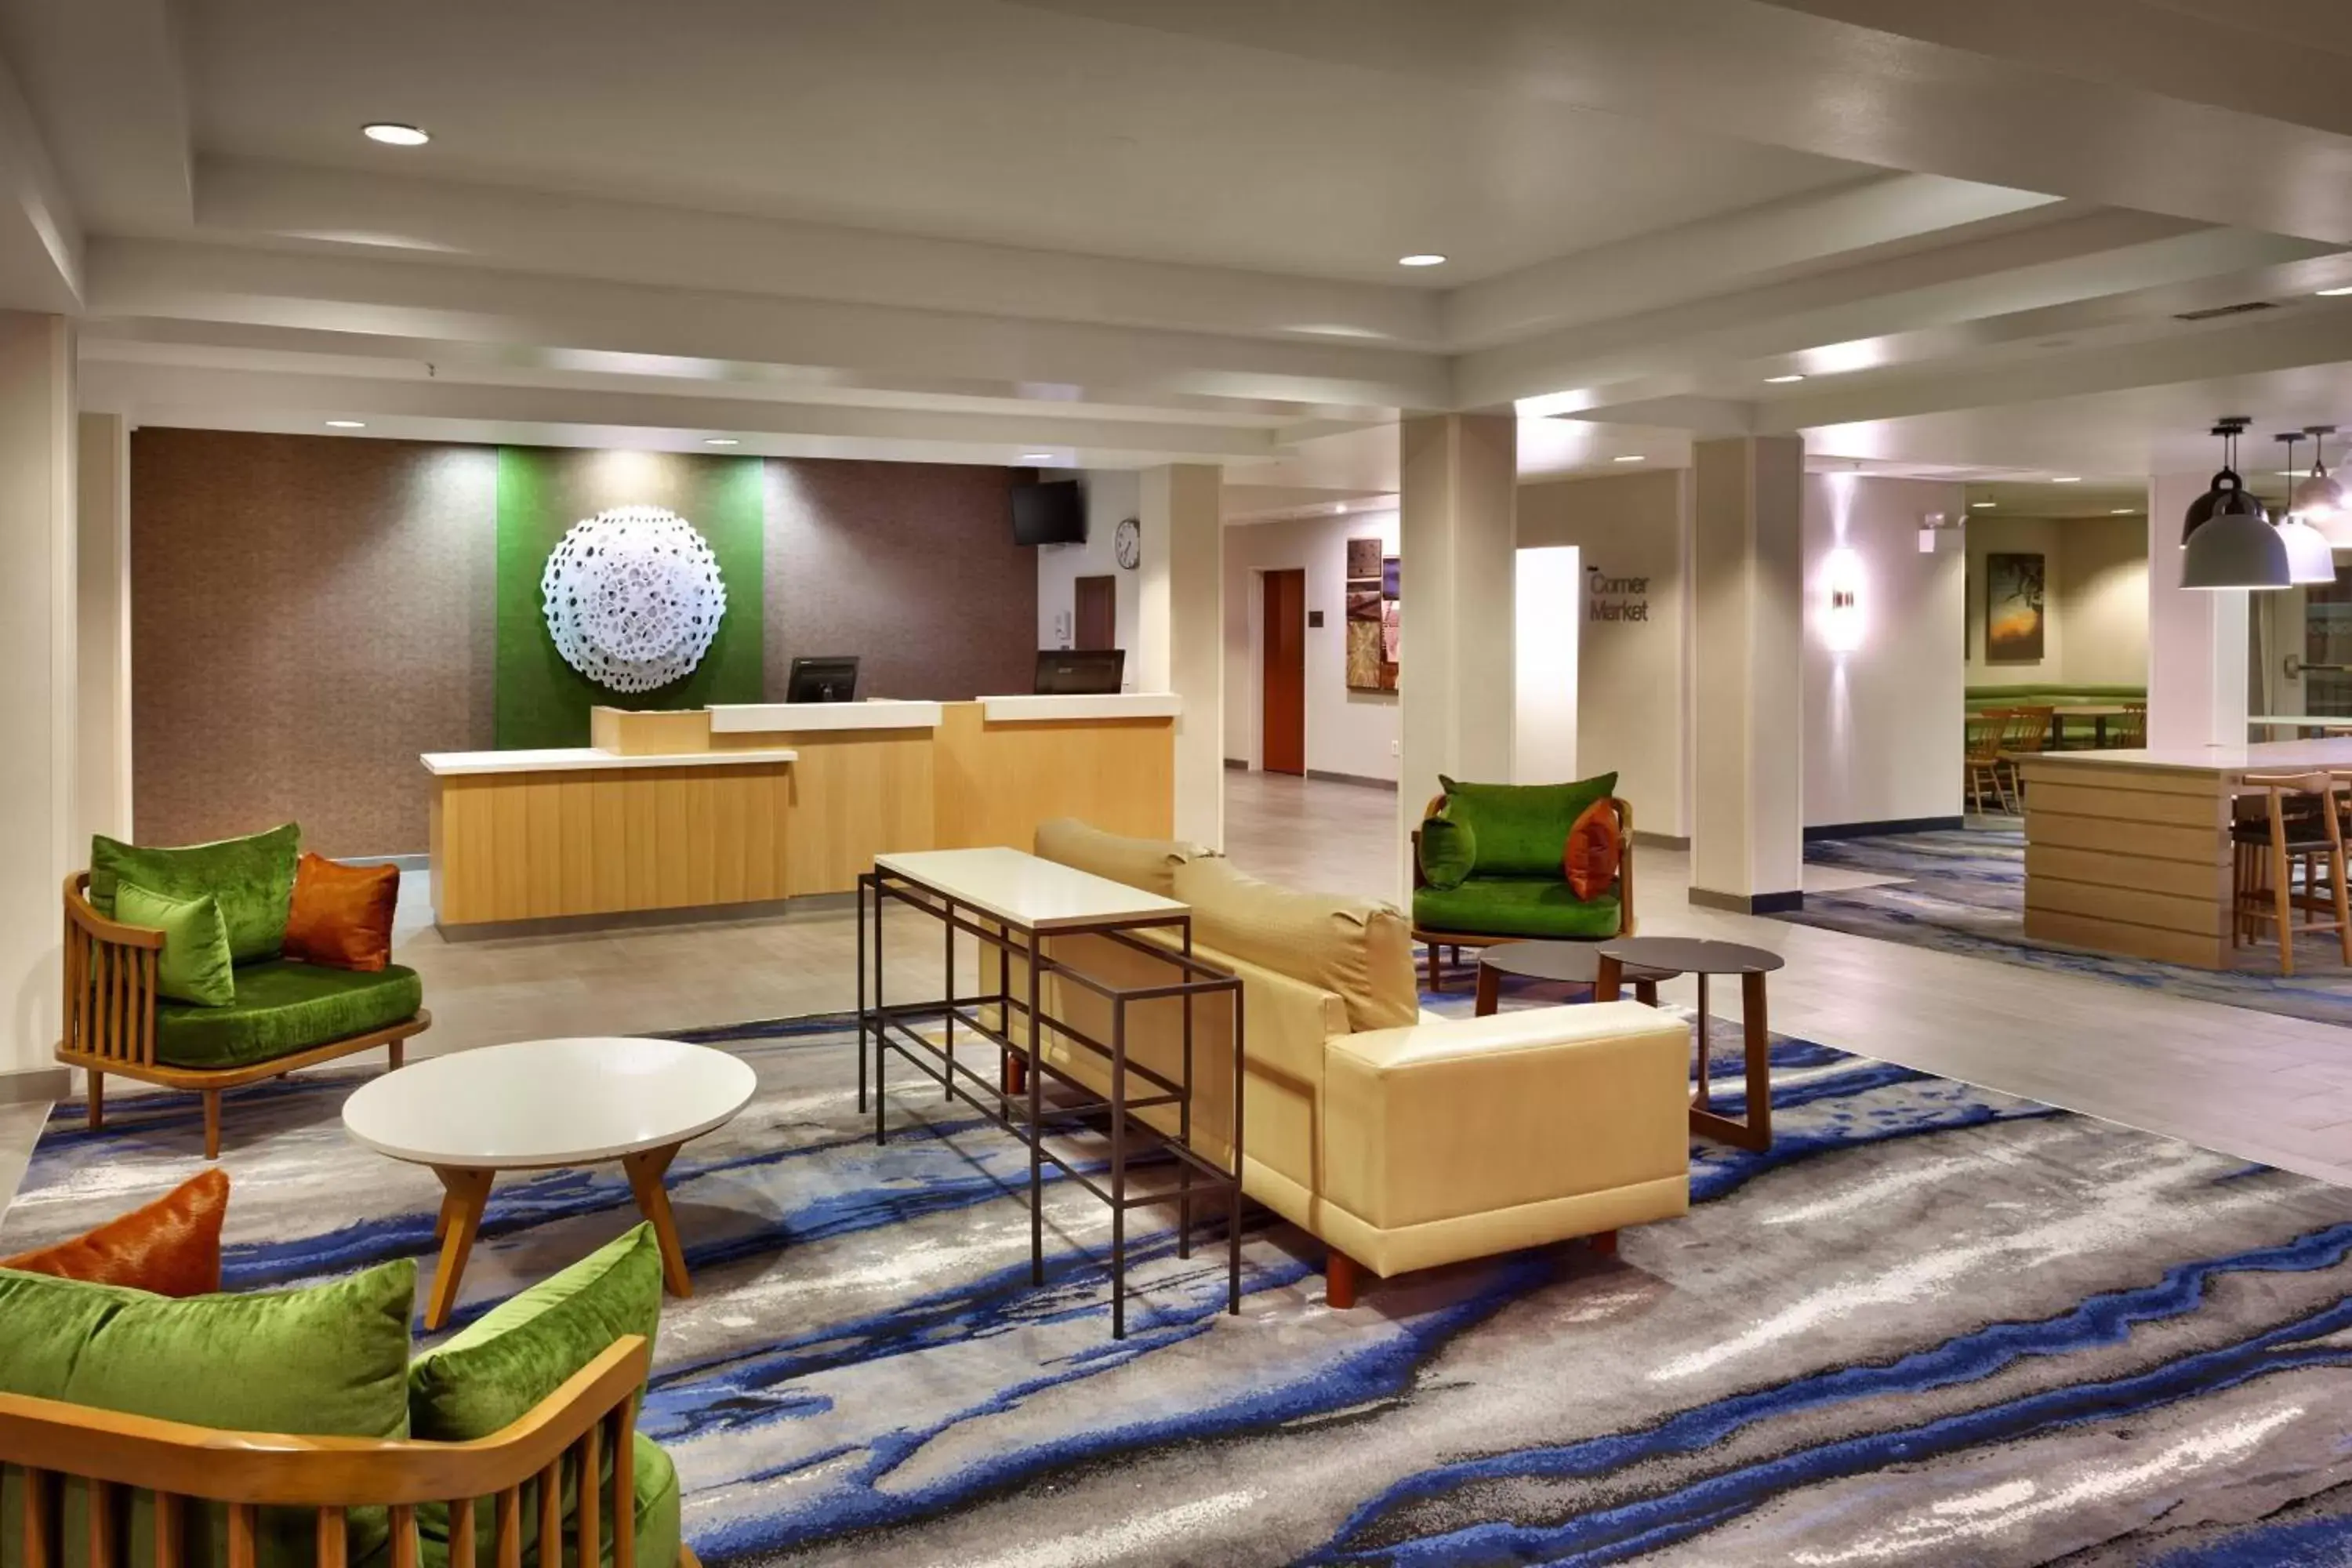 Lobby or reception in Fairfield Inn and Suites Sierra Vista